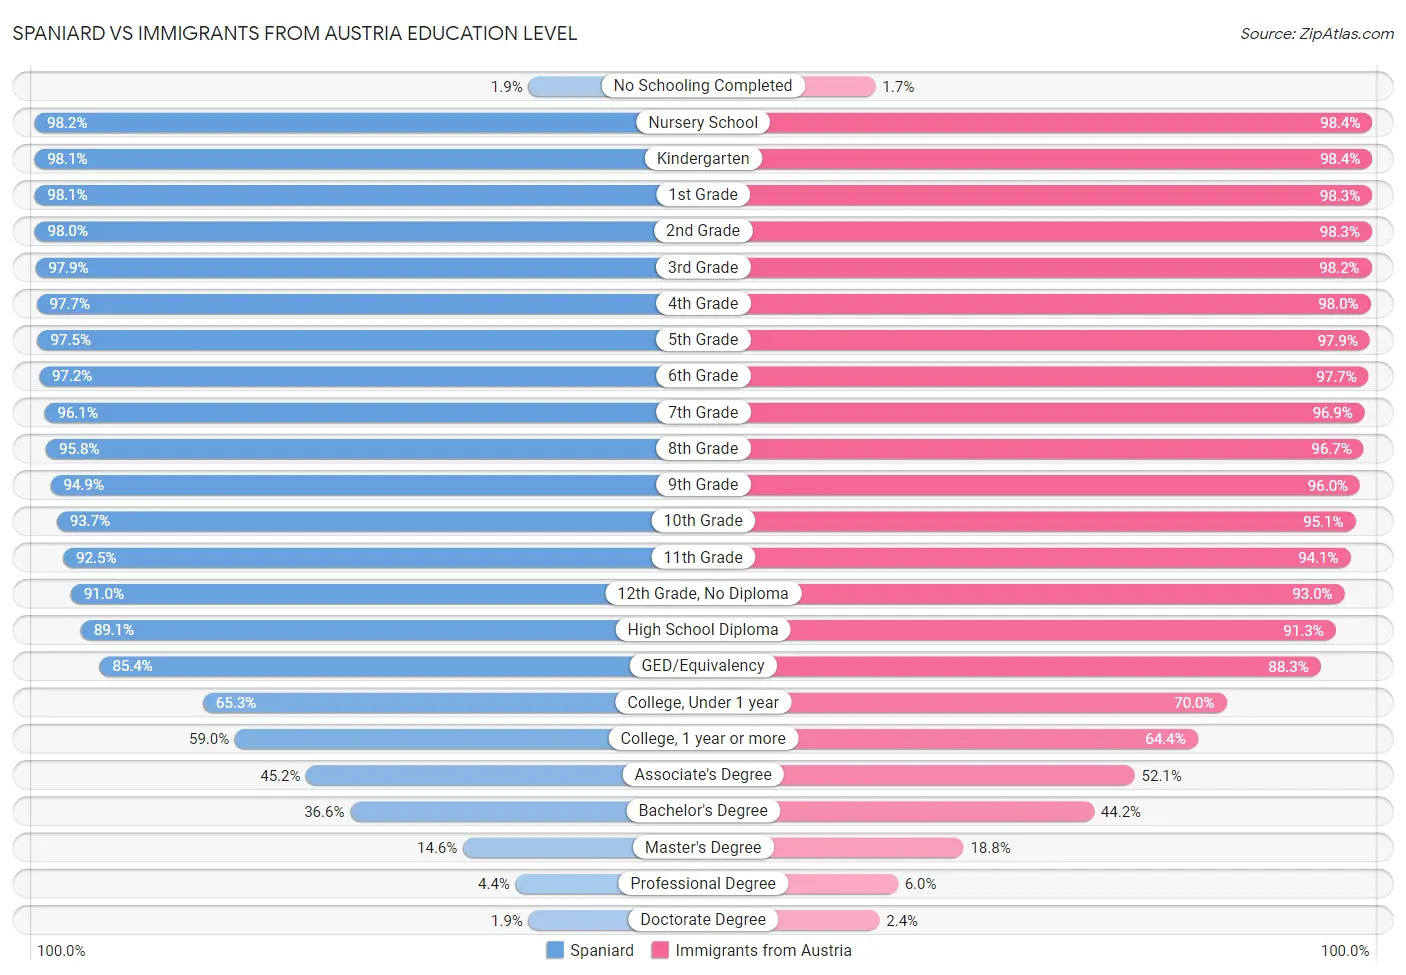 Spaniard vs Immigrants from Austria Education Level